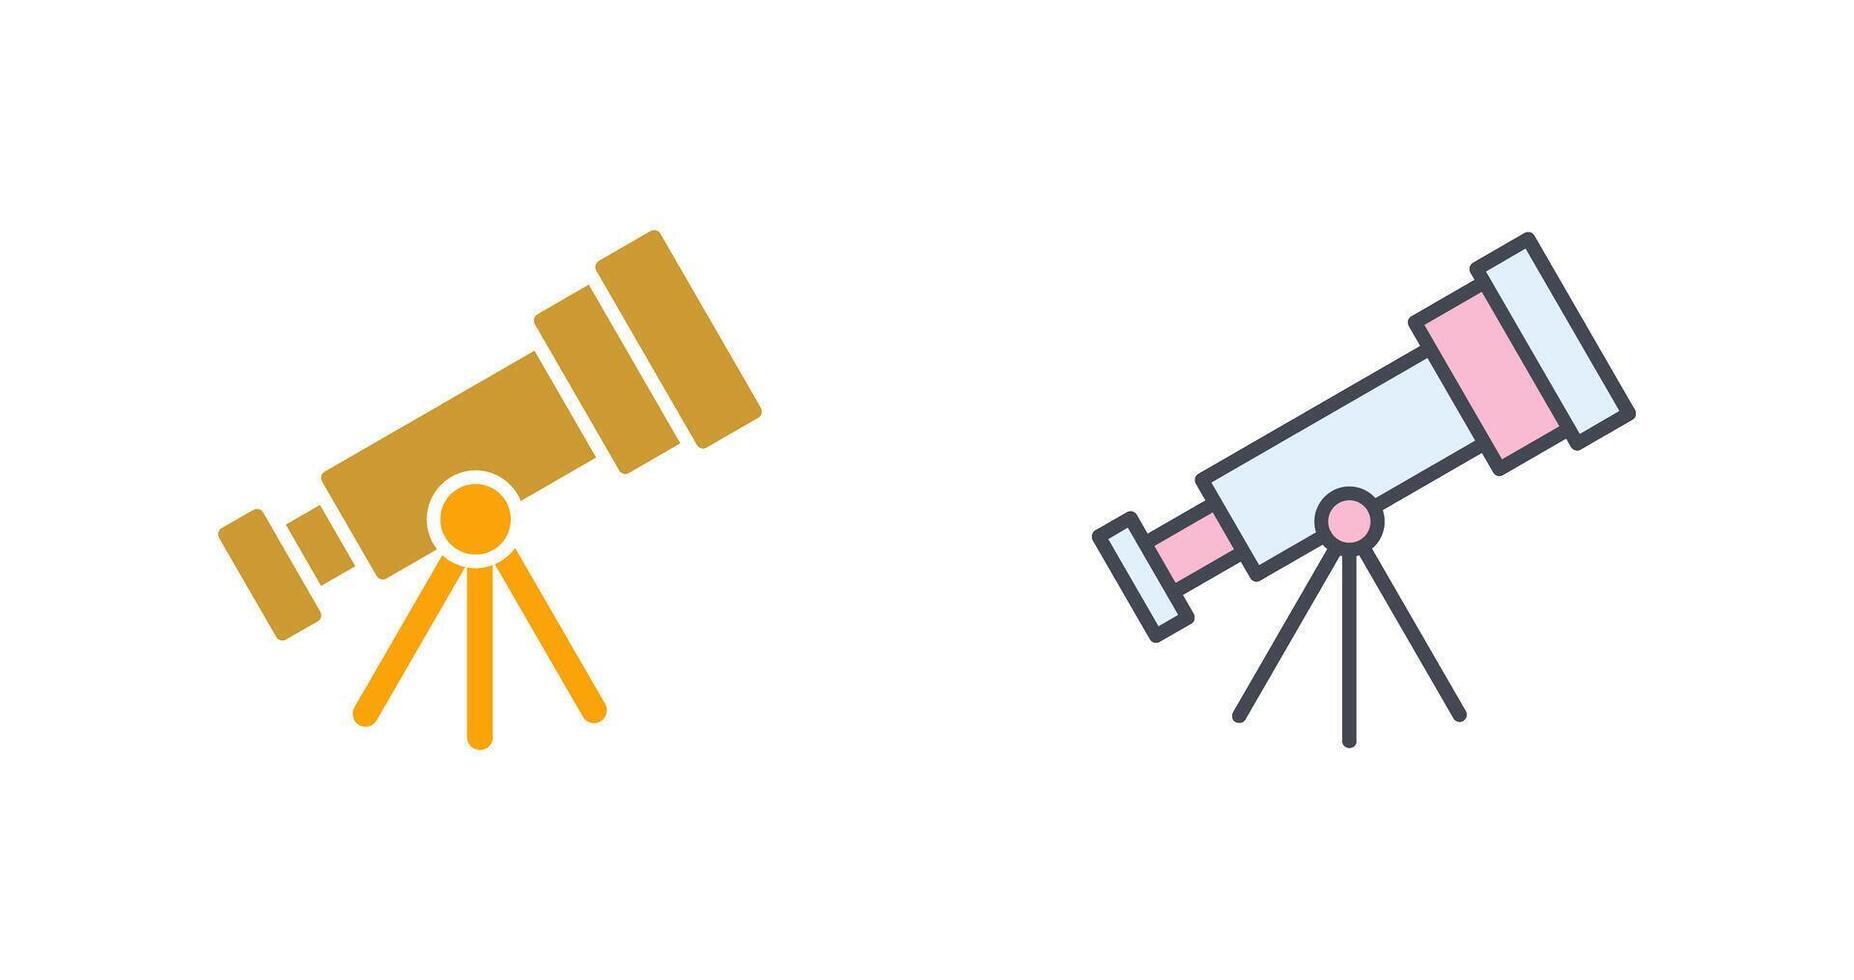 teleskop ikon design vektor